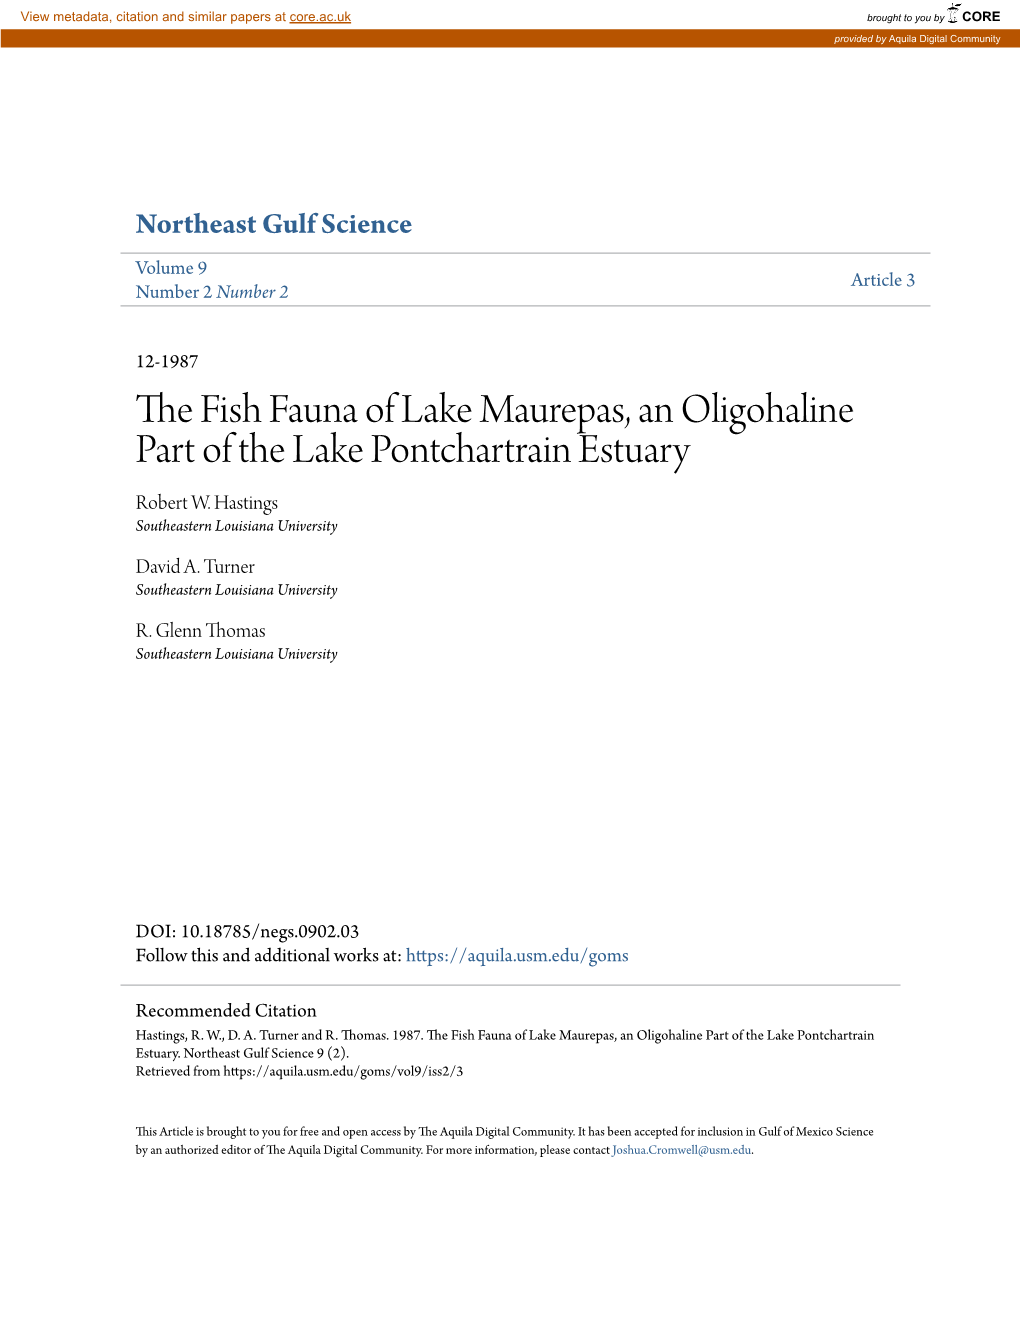 The Fish Fauna of Lake Maurepas, an Oligohaline Part of the Lake Pontchartrain Estuary